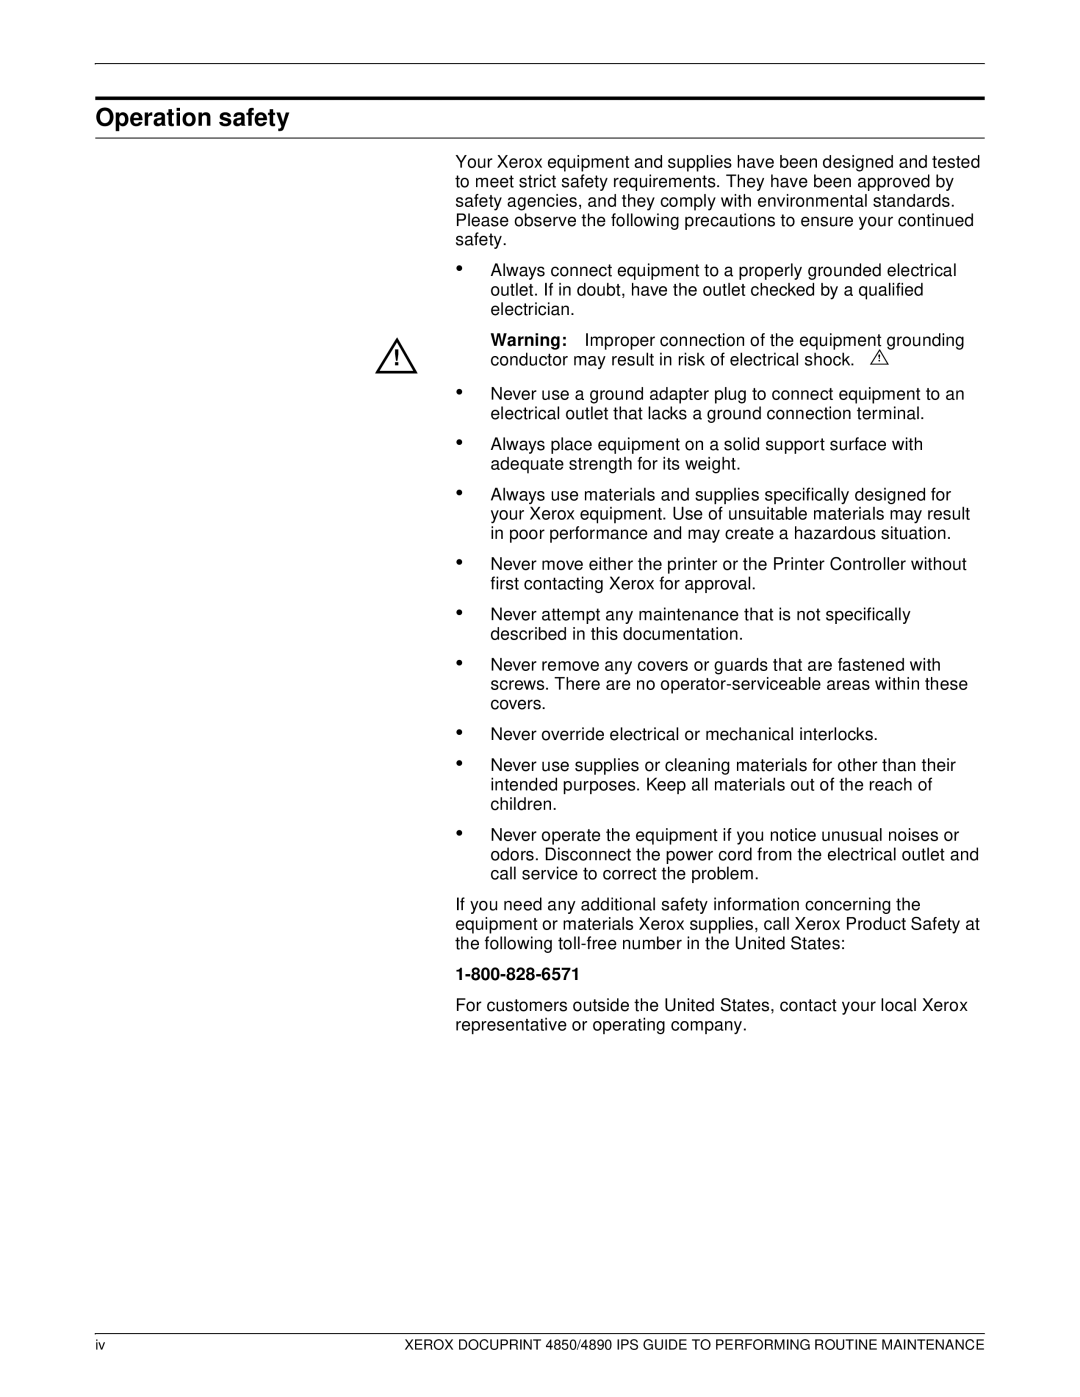 Xerox 4890 IPS manual Operation safety 